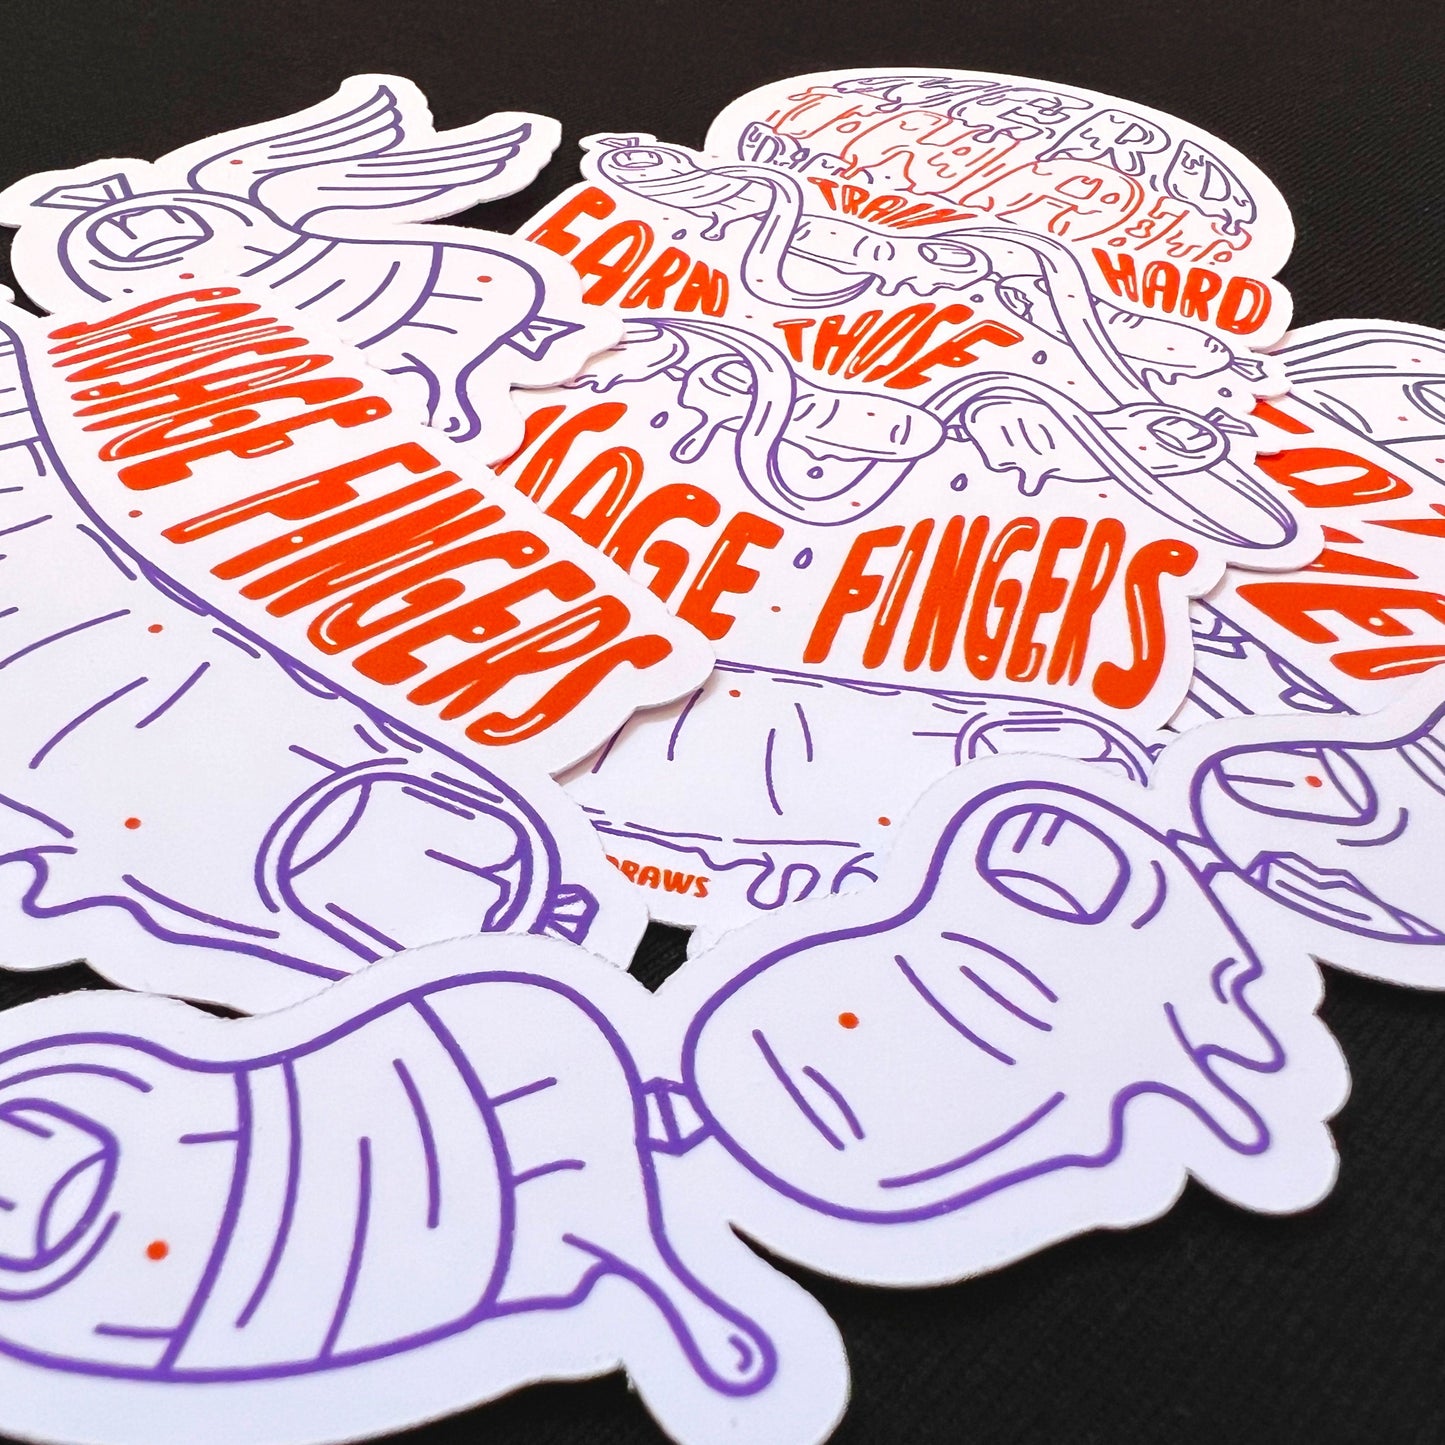 Sausage Fingers Sticker Pack - White